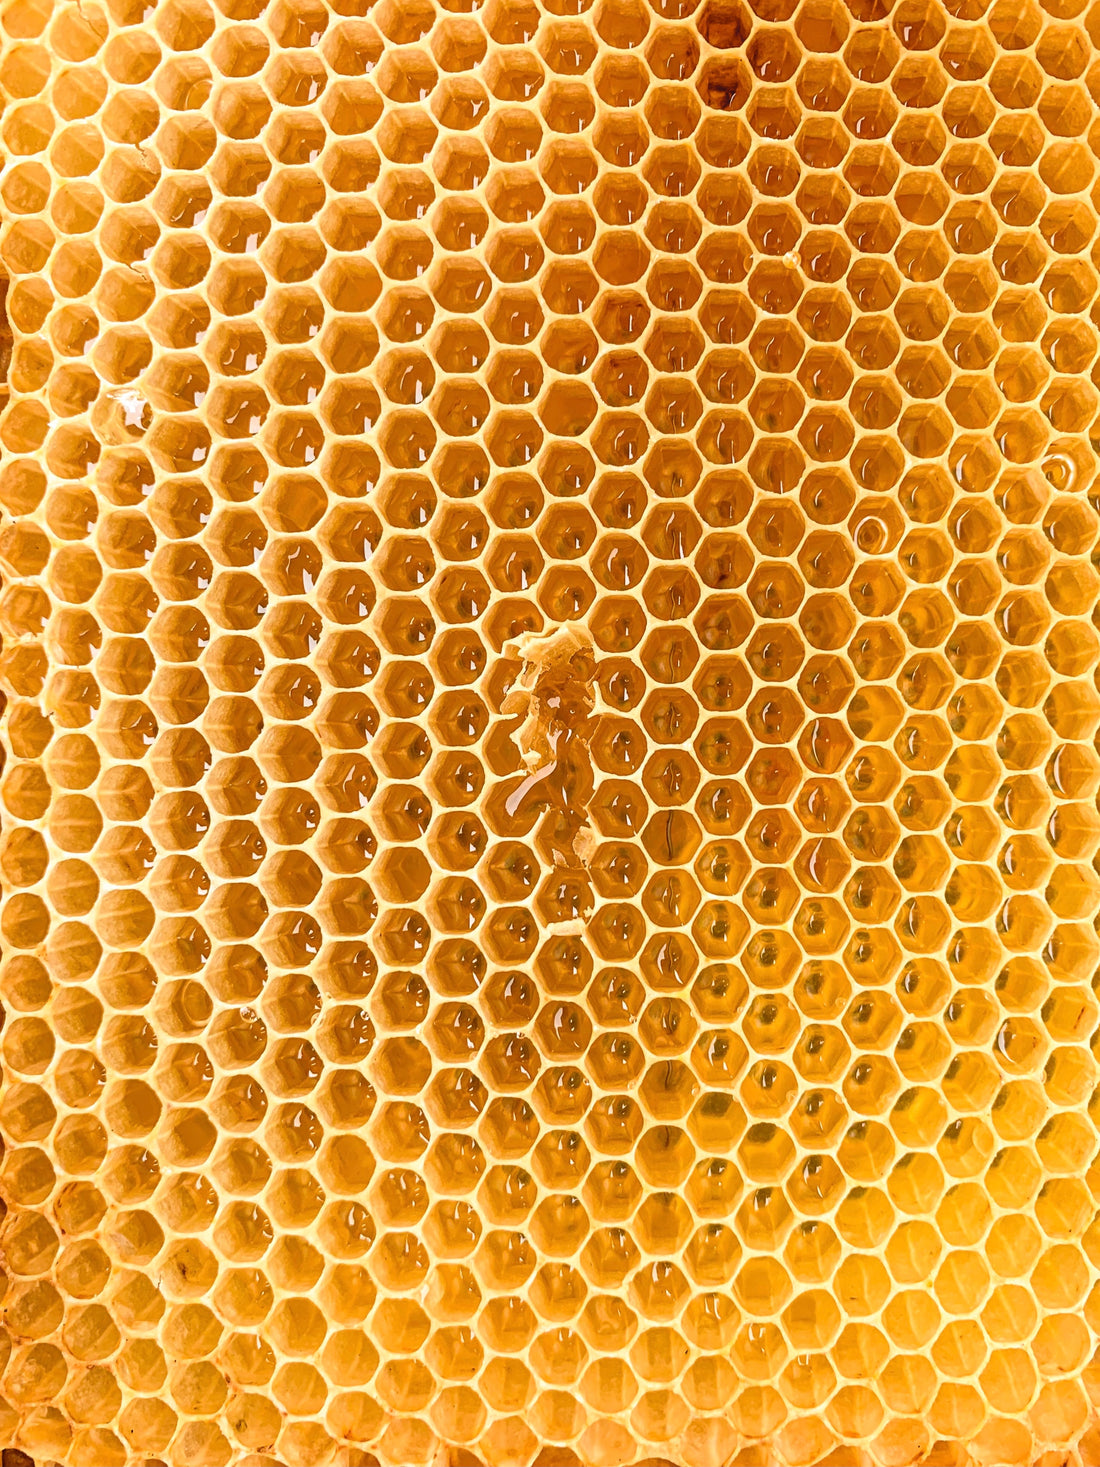 The Benefits of Local Honey